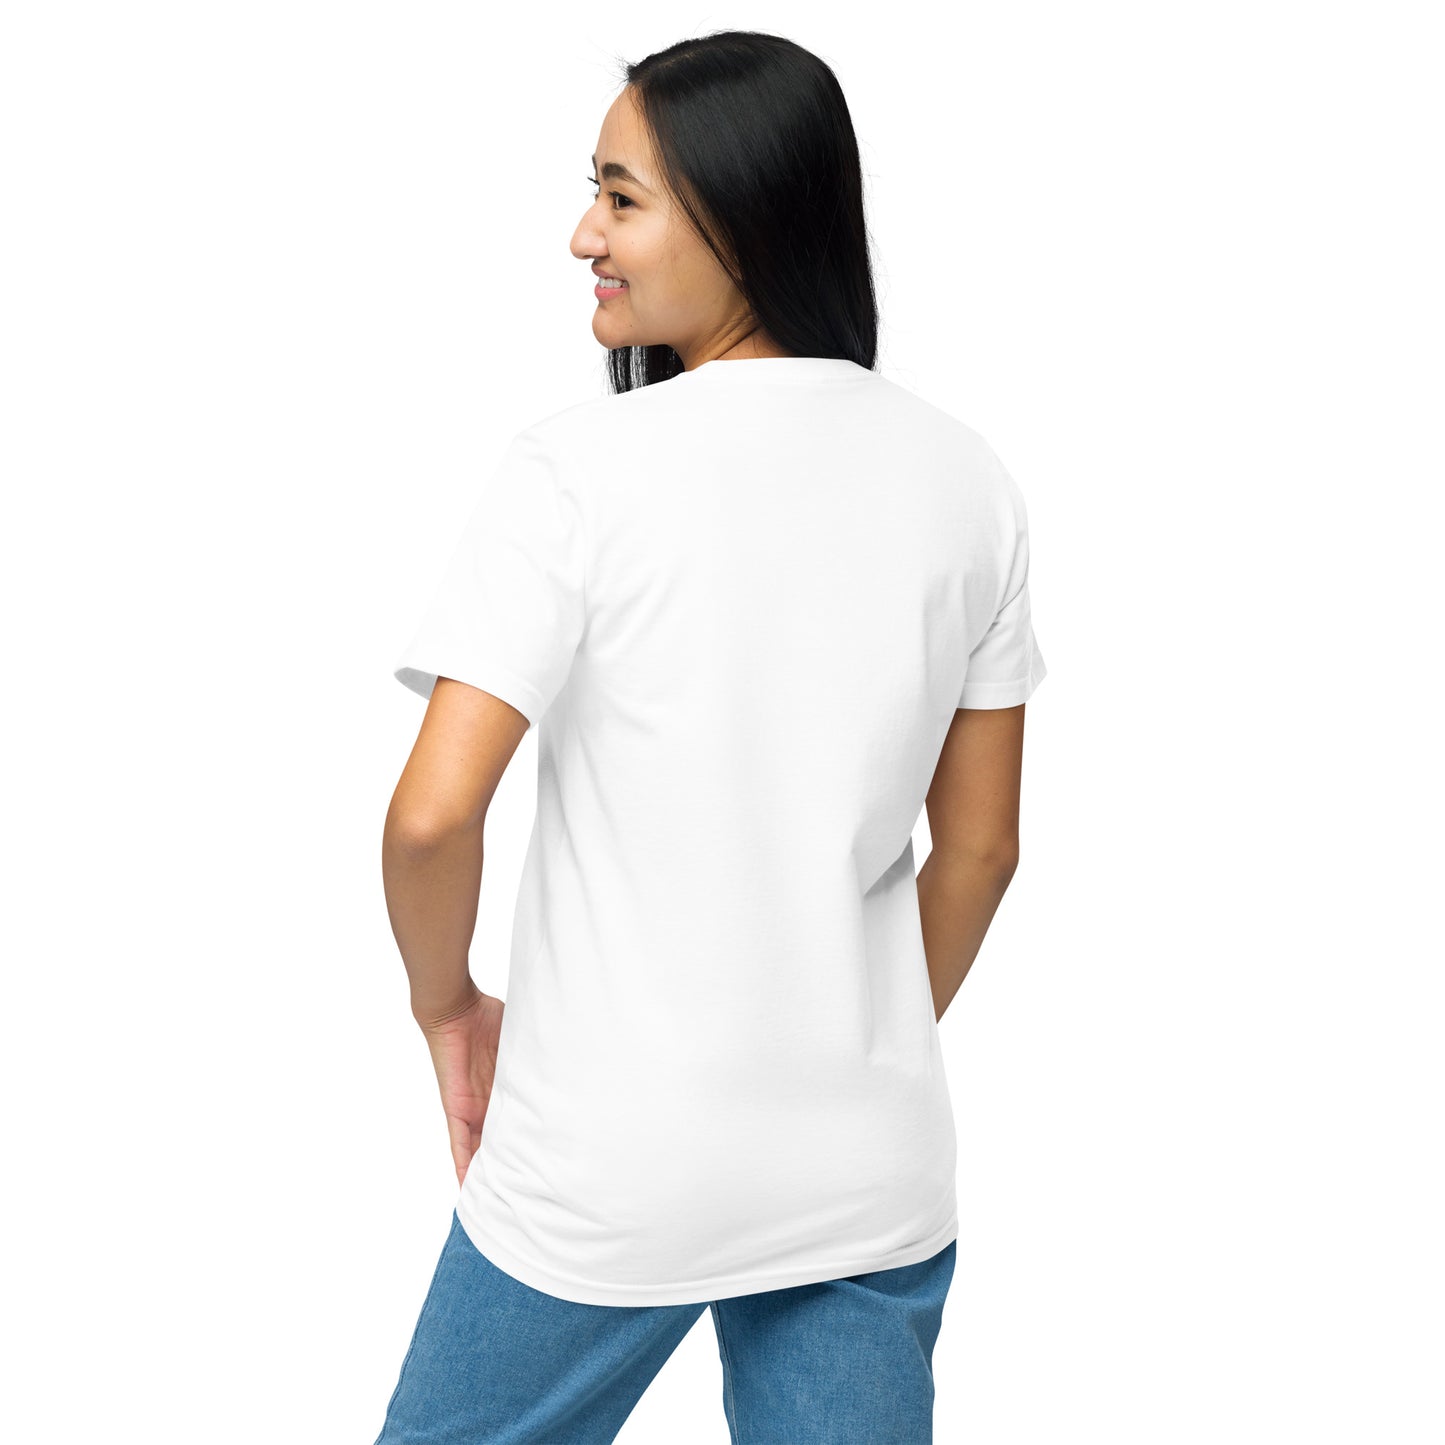 Be Strong Women's Oversized 100% Organic Cotton T-Shirt